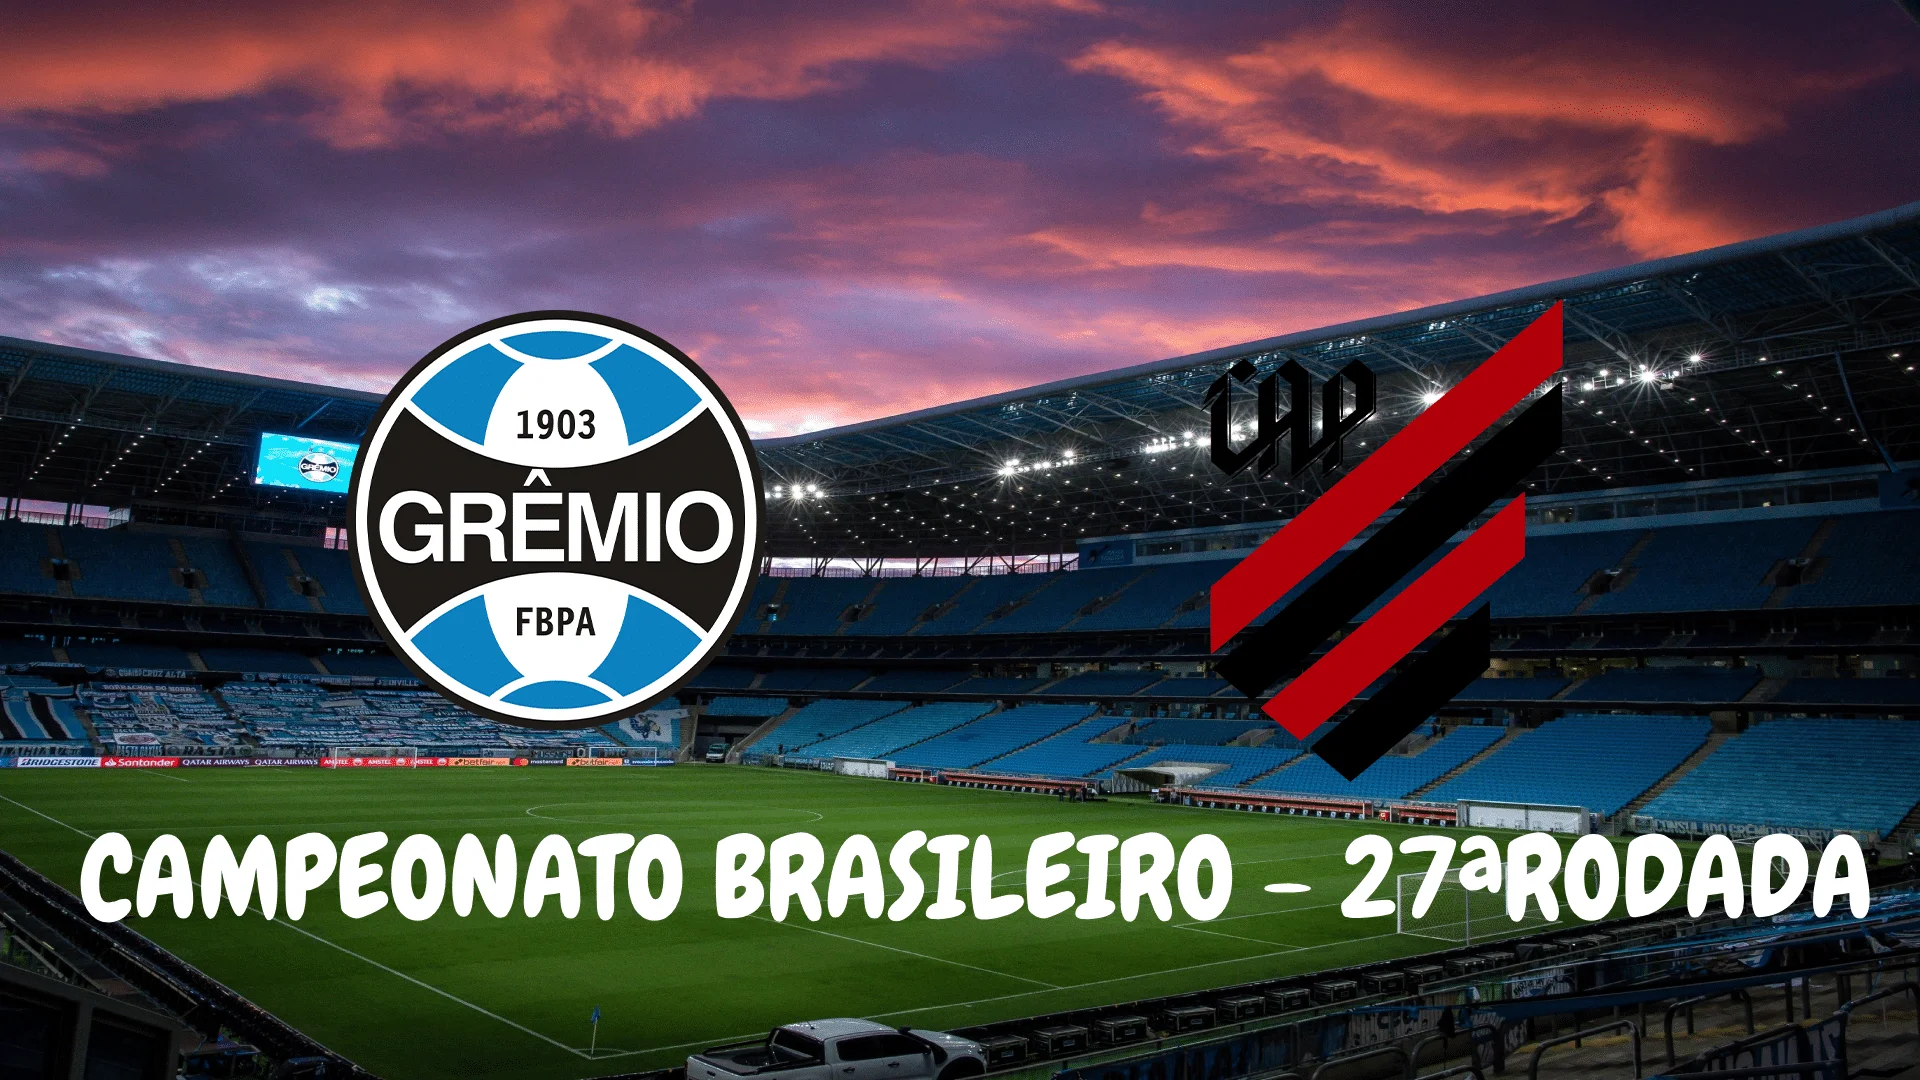 Grêmio vs Caxias: A Rivalry Renewed